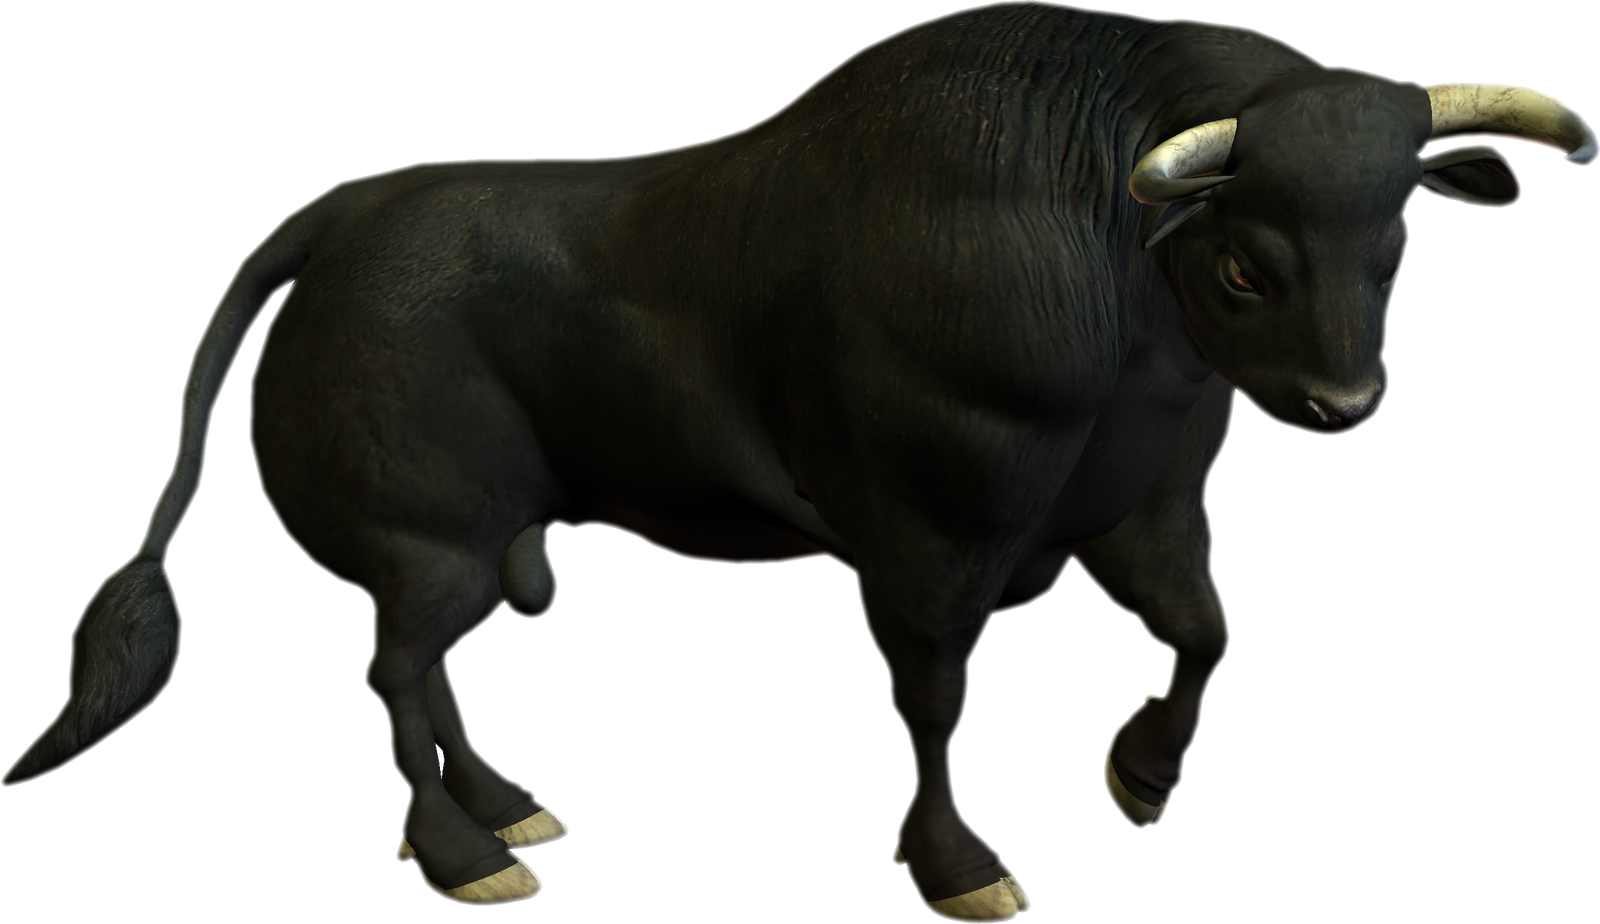 A Black Bull With Horns